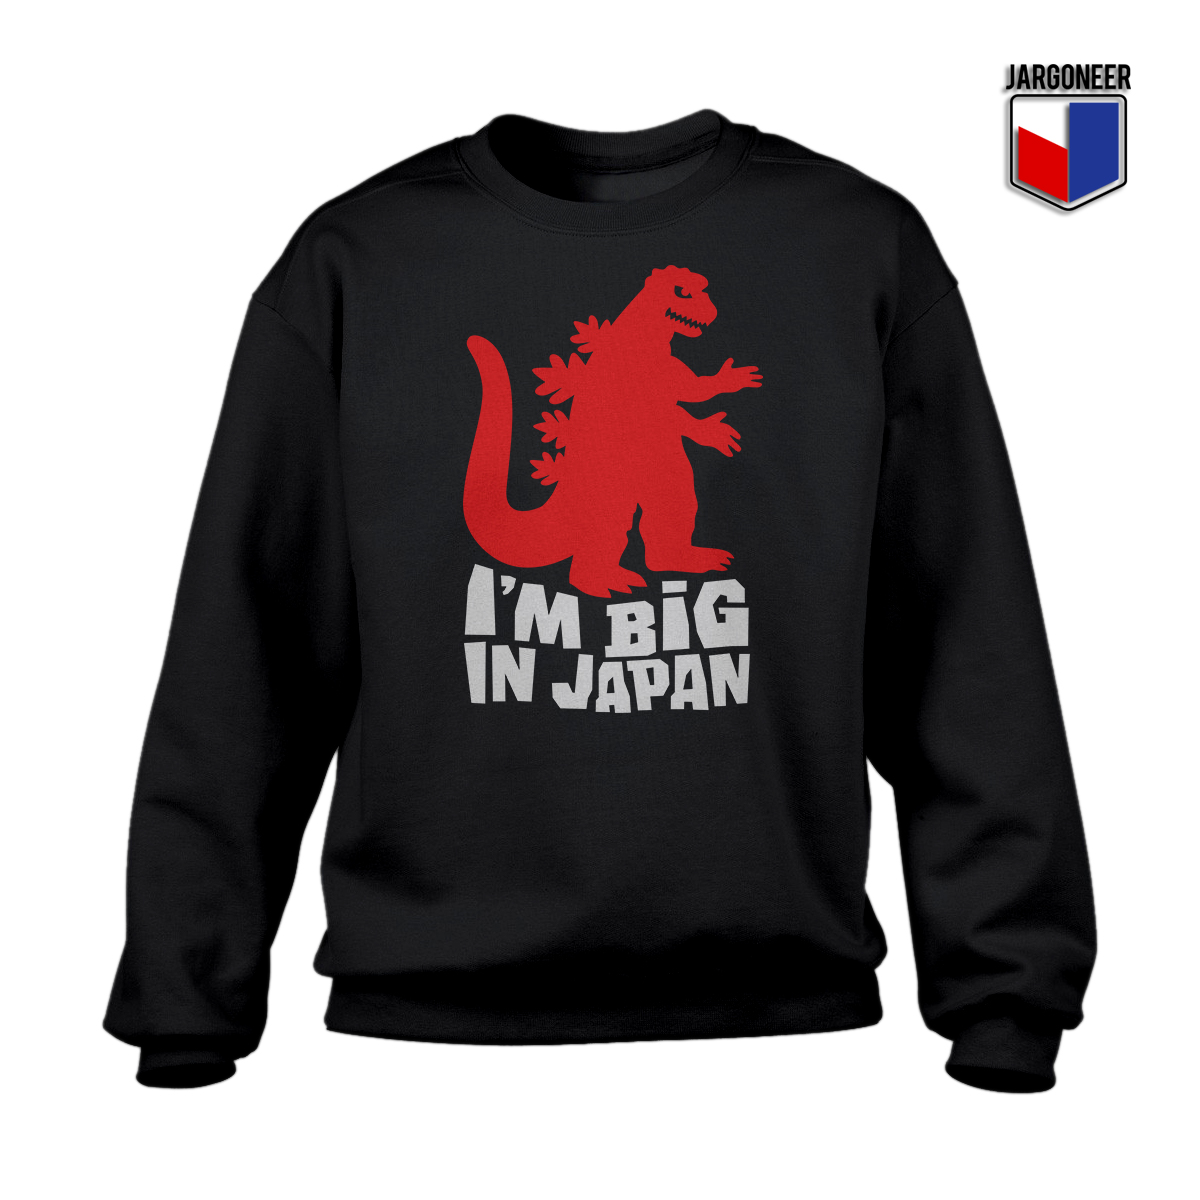 I Am Big In Japan Black SS - Shop Unique Graphic Cool Shirt Designs